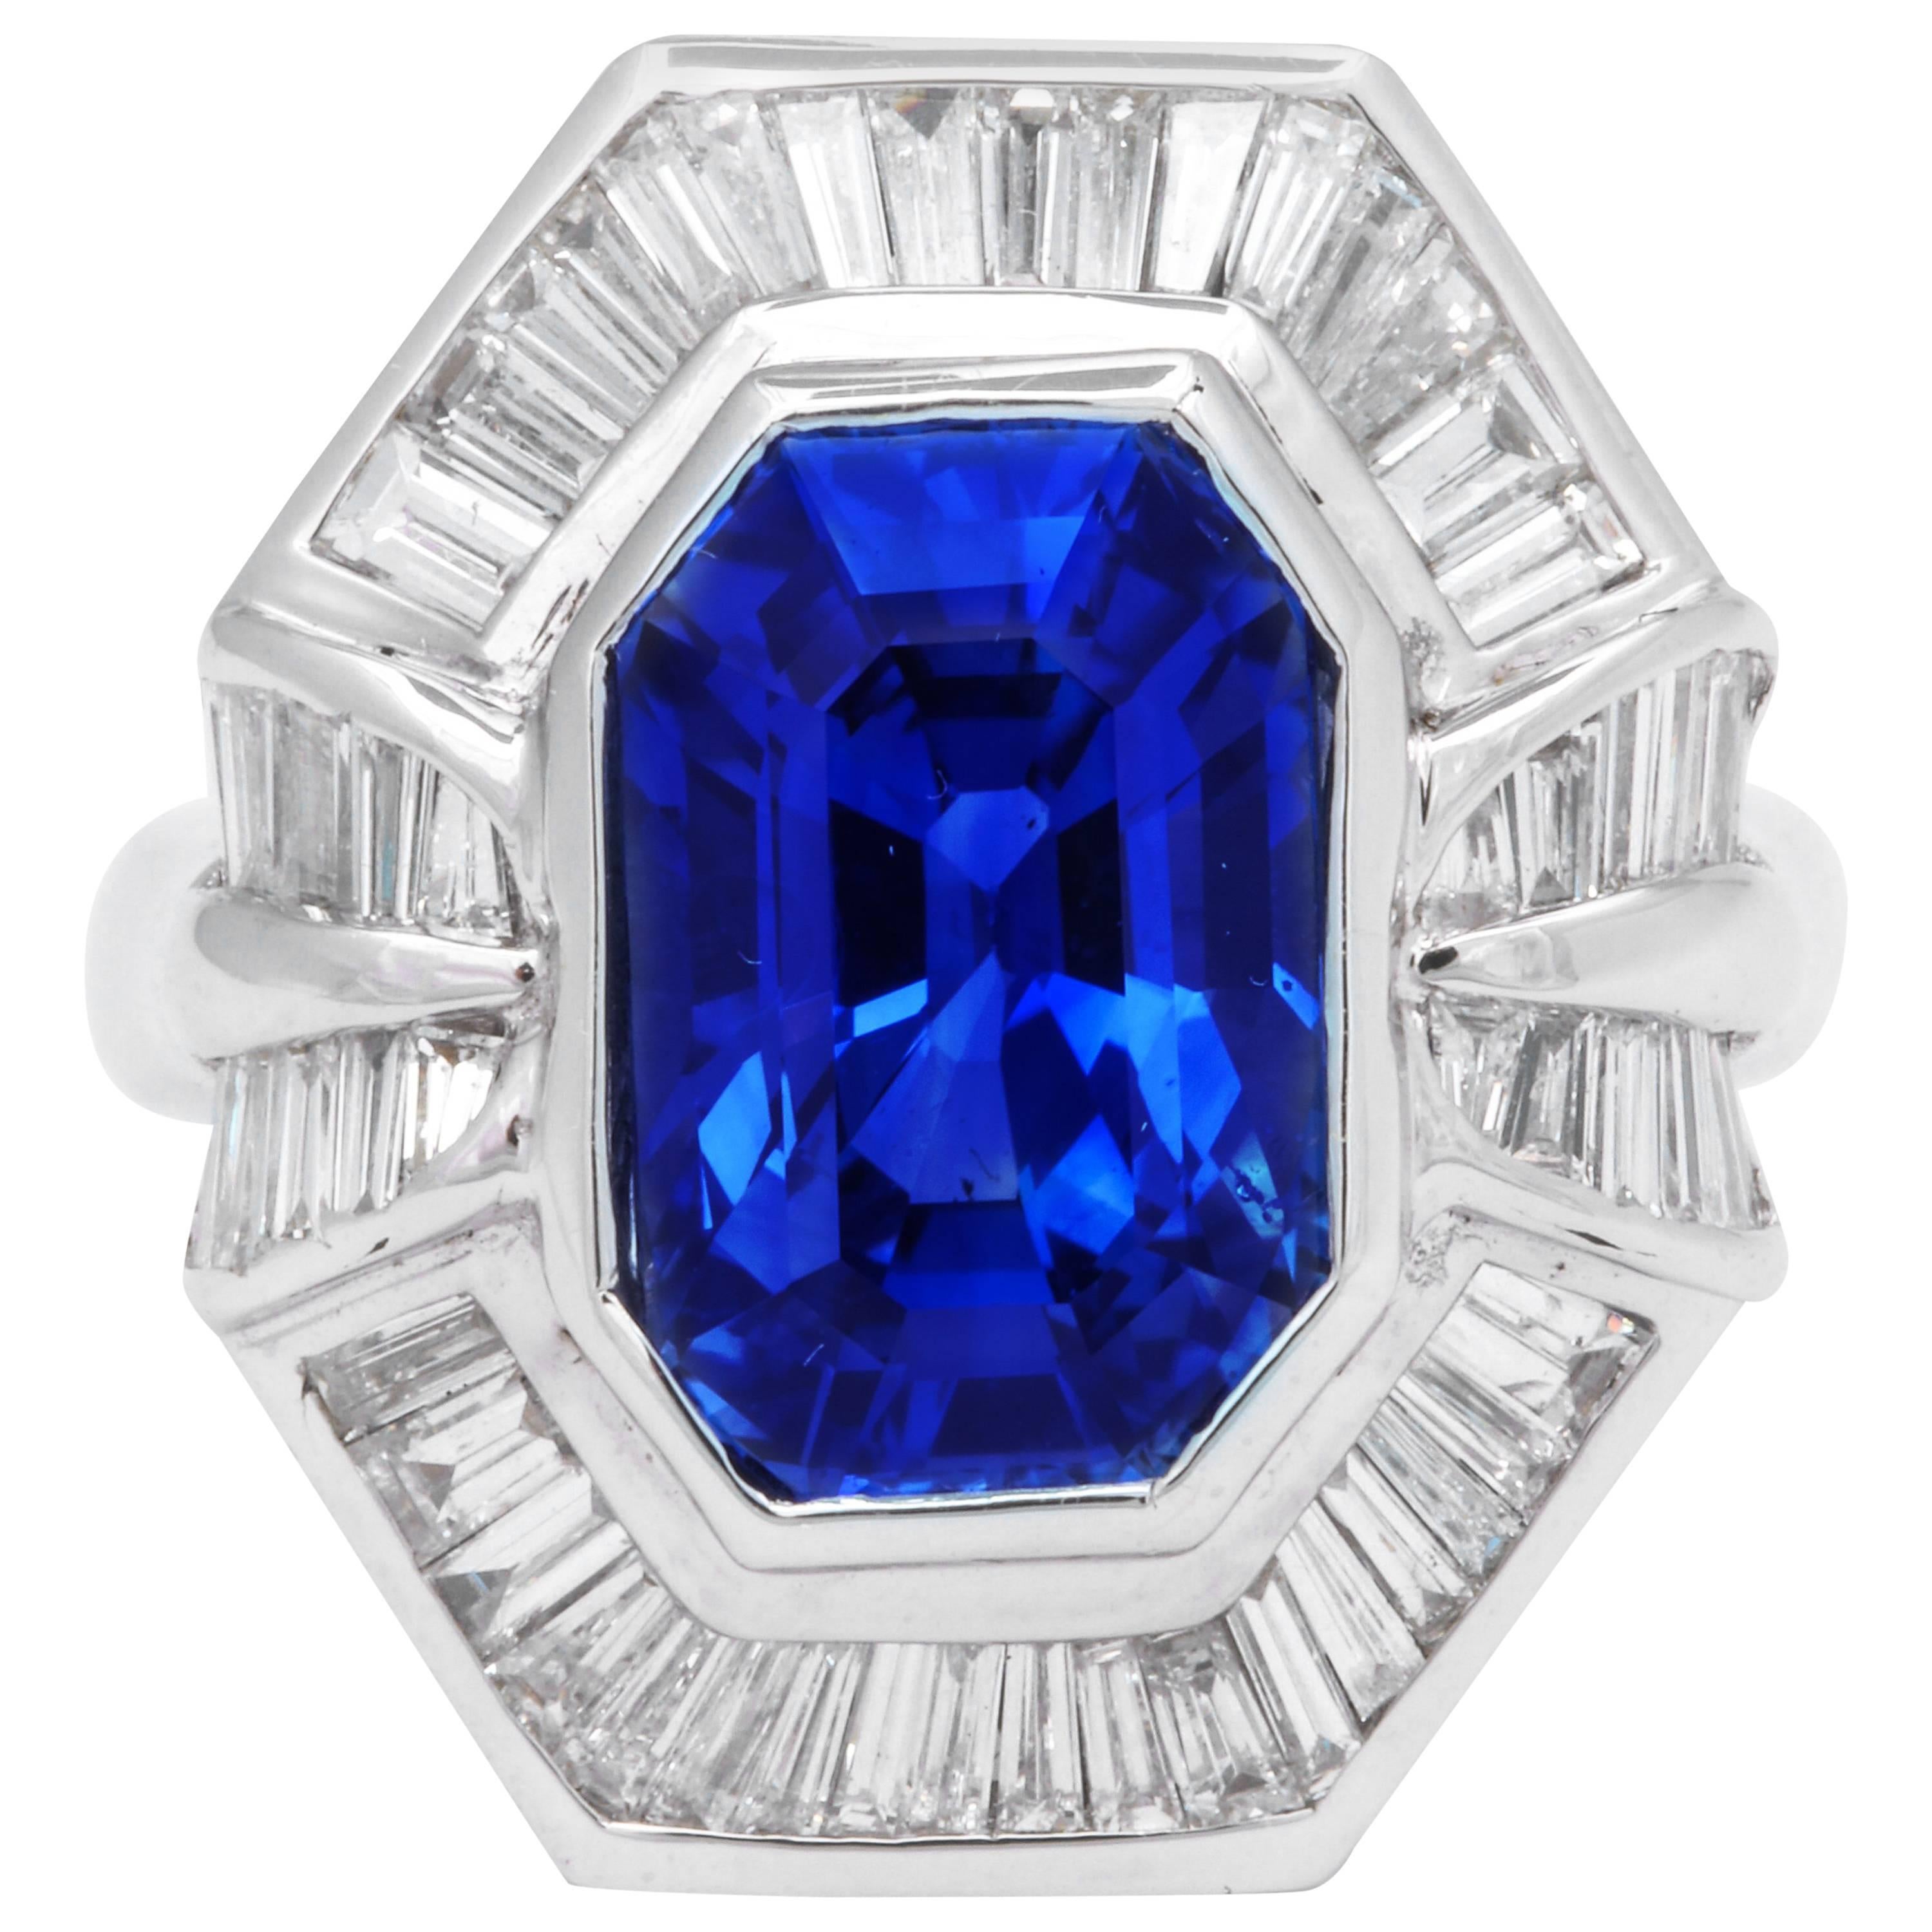 AGL Certified Emerald Cut Sapphire Baguette Diamond Cocktail Ring